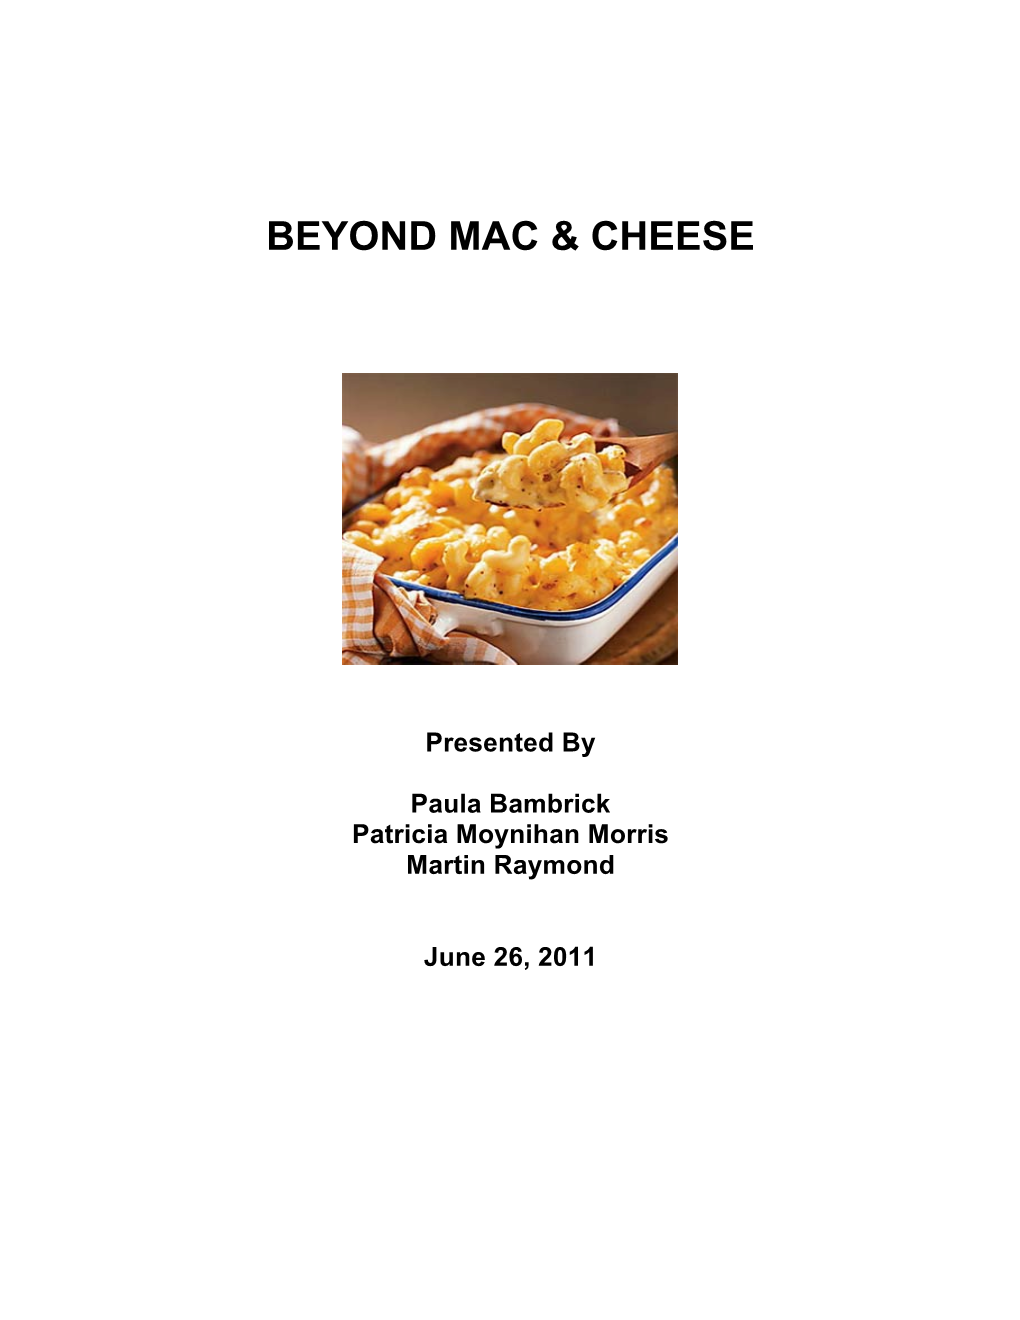 Beyond Mac & Cheese